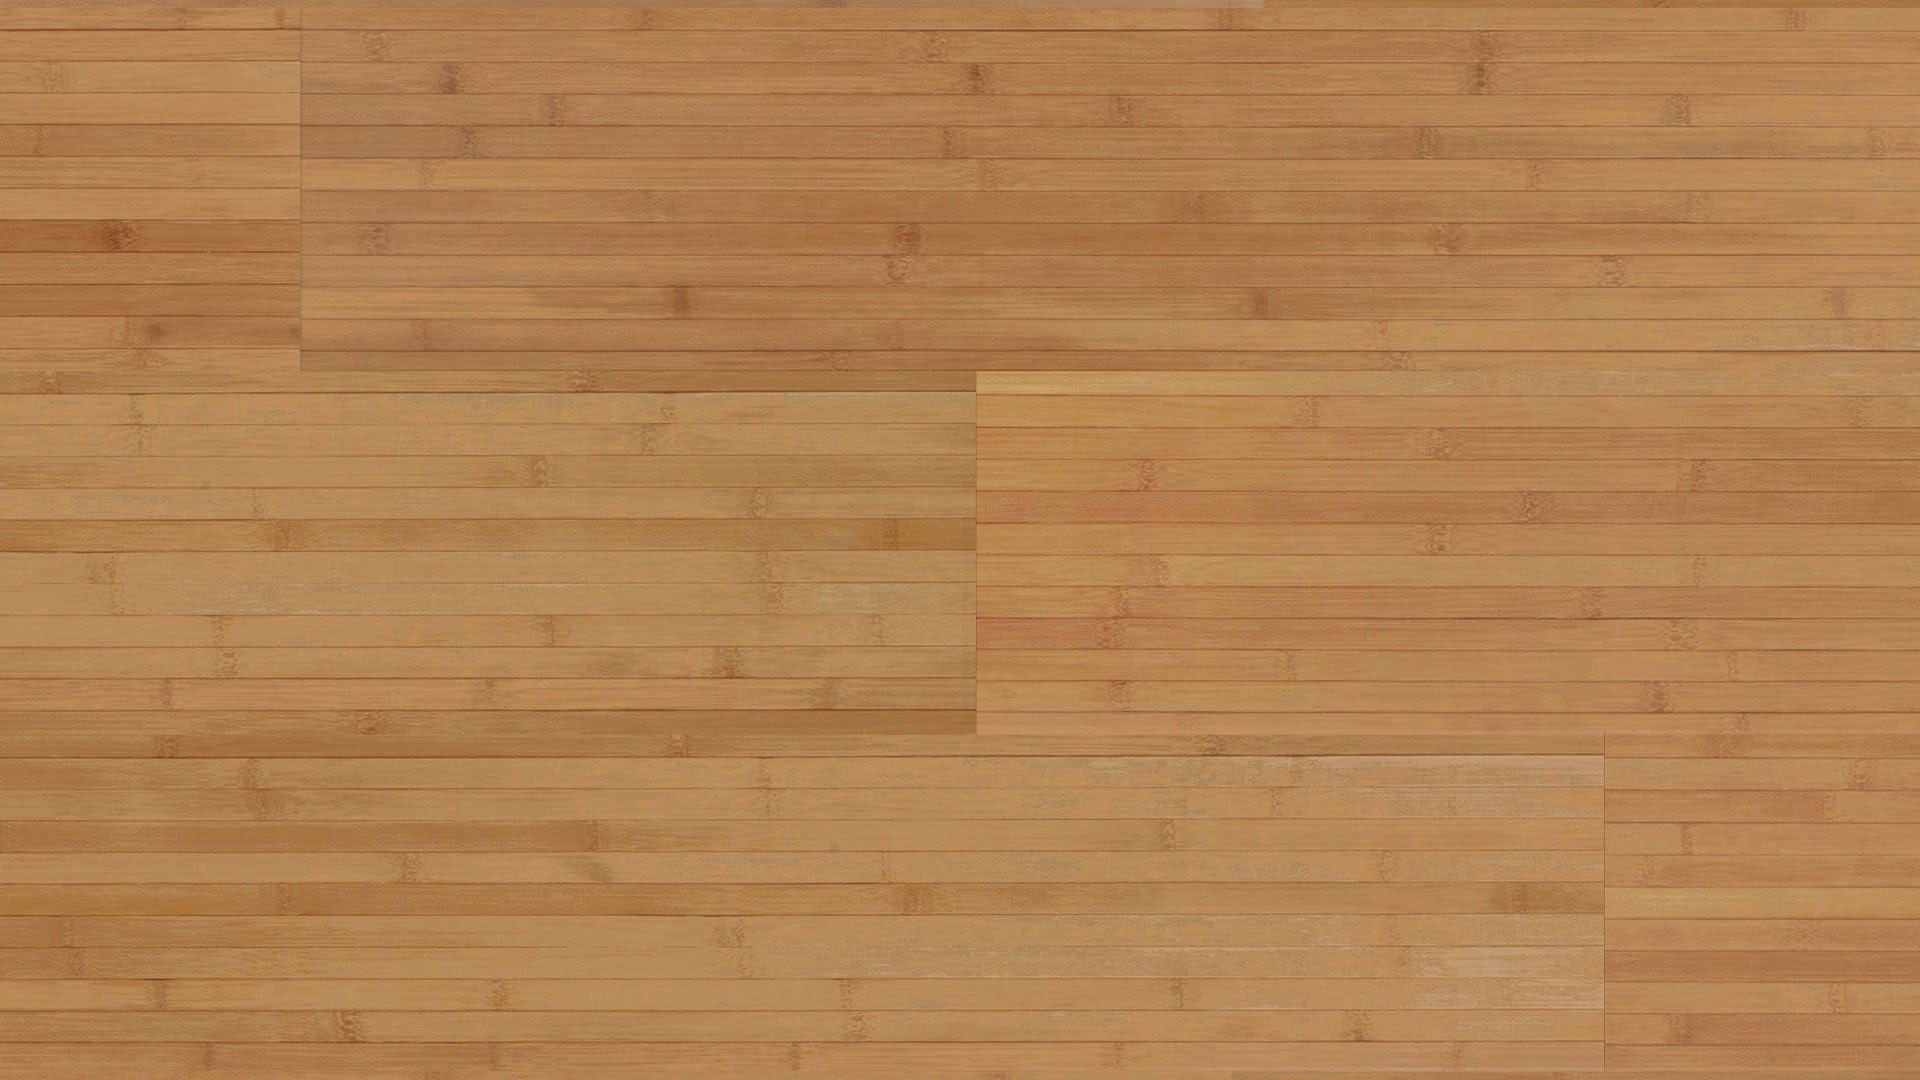 12 Perfect Hardwood Flooring In Hawaii Unique Flooring Ideas